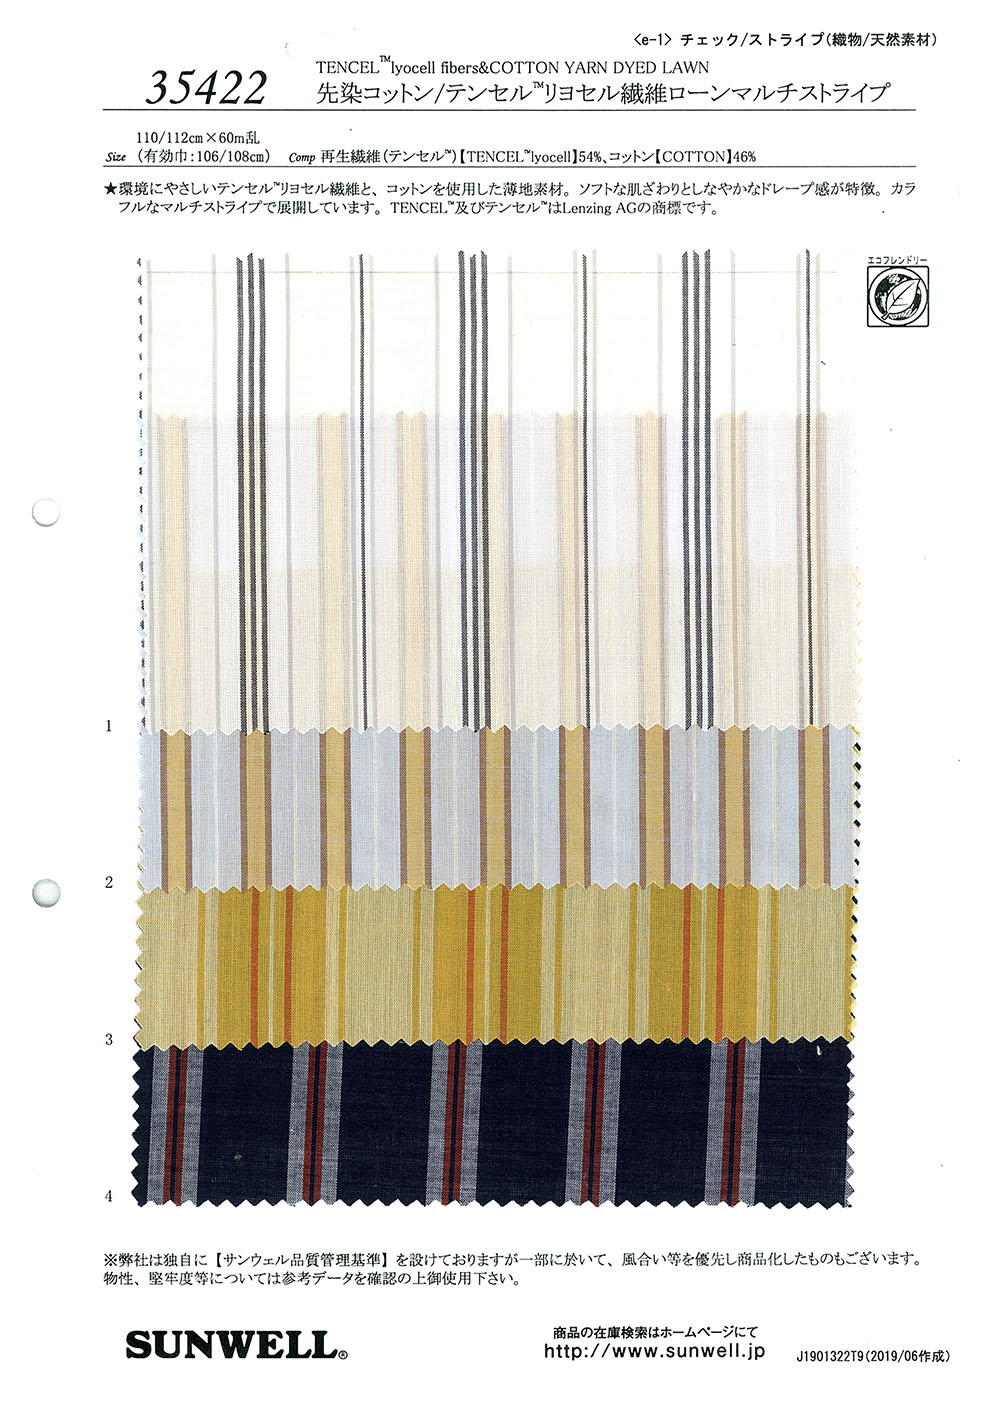 35422 Cotone Tinto In Filo/Tencel (TM) Fibra Lyocell Prato Multirighe[Tessile / Tessuto] SUNWELL